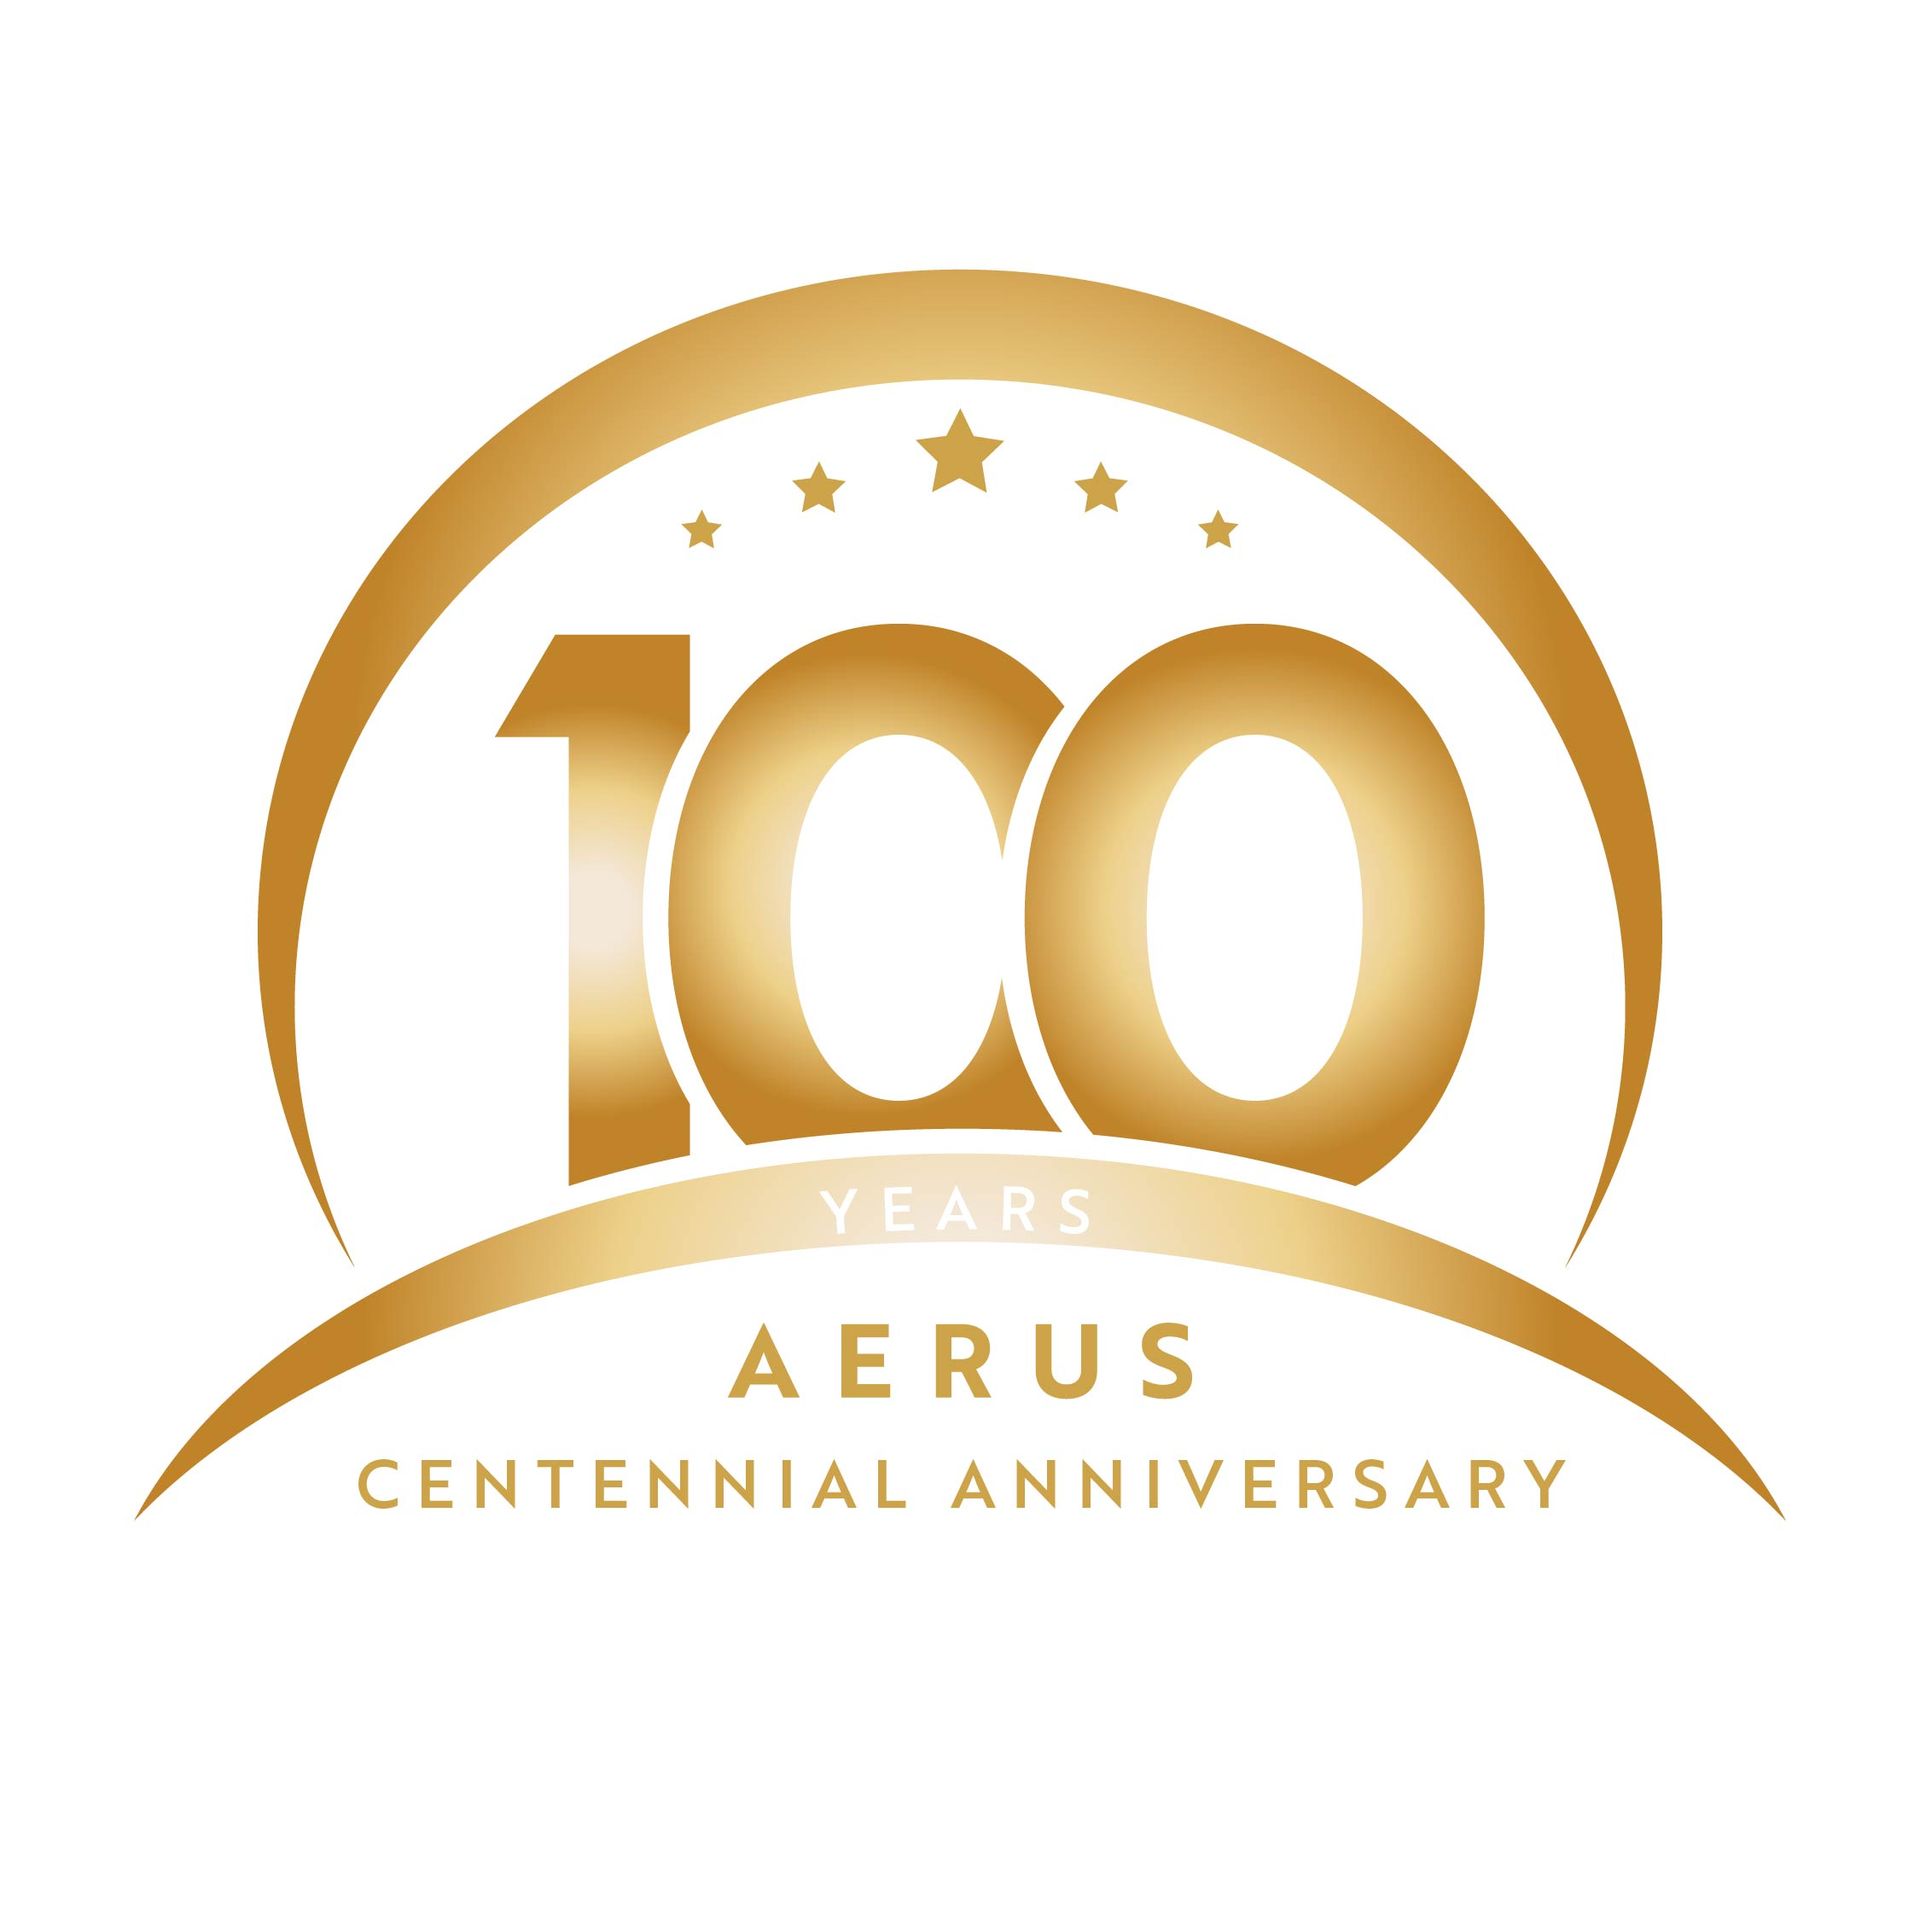 A gold logo for the aerius centennial anniversary